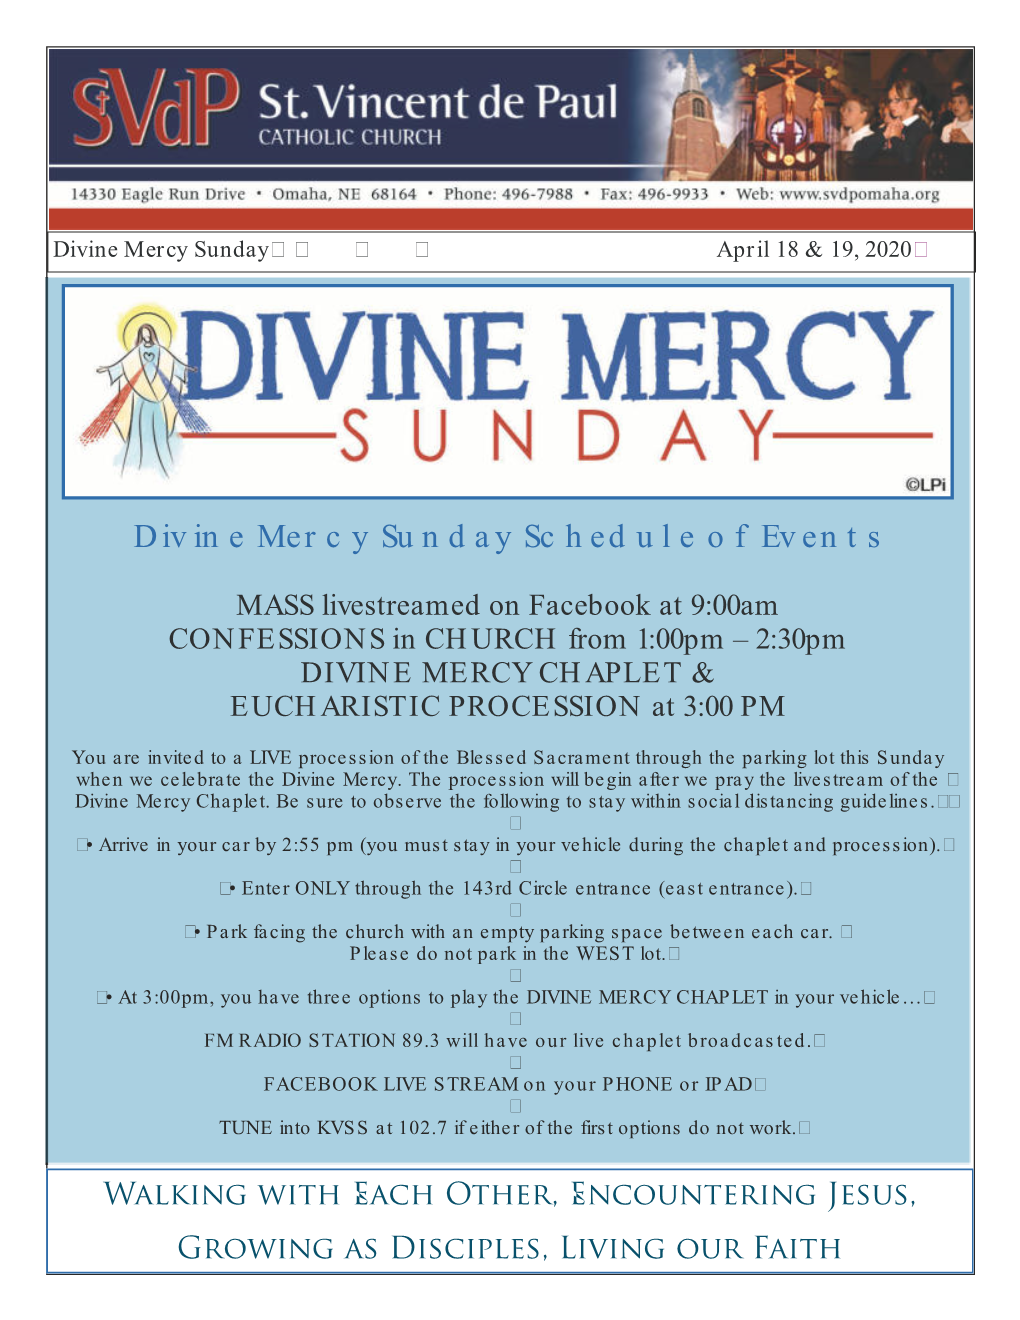 Divine Mercy Sunday Schedule of Events